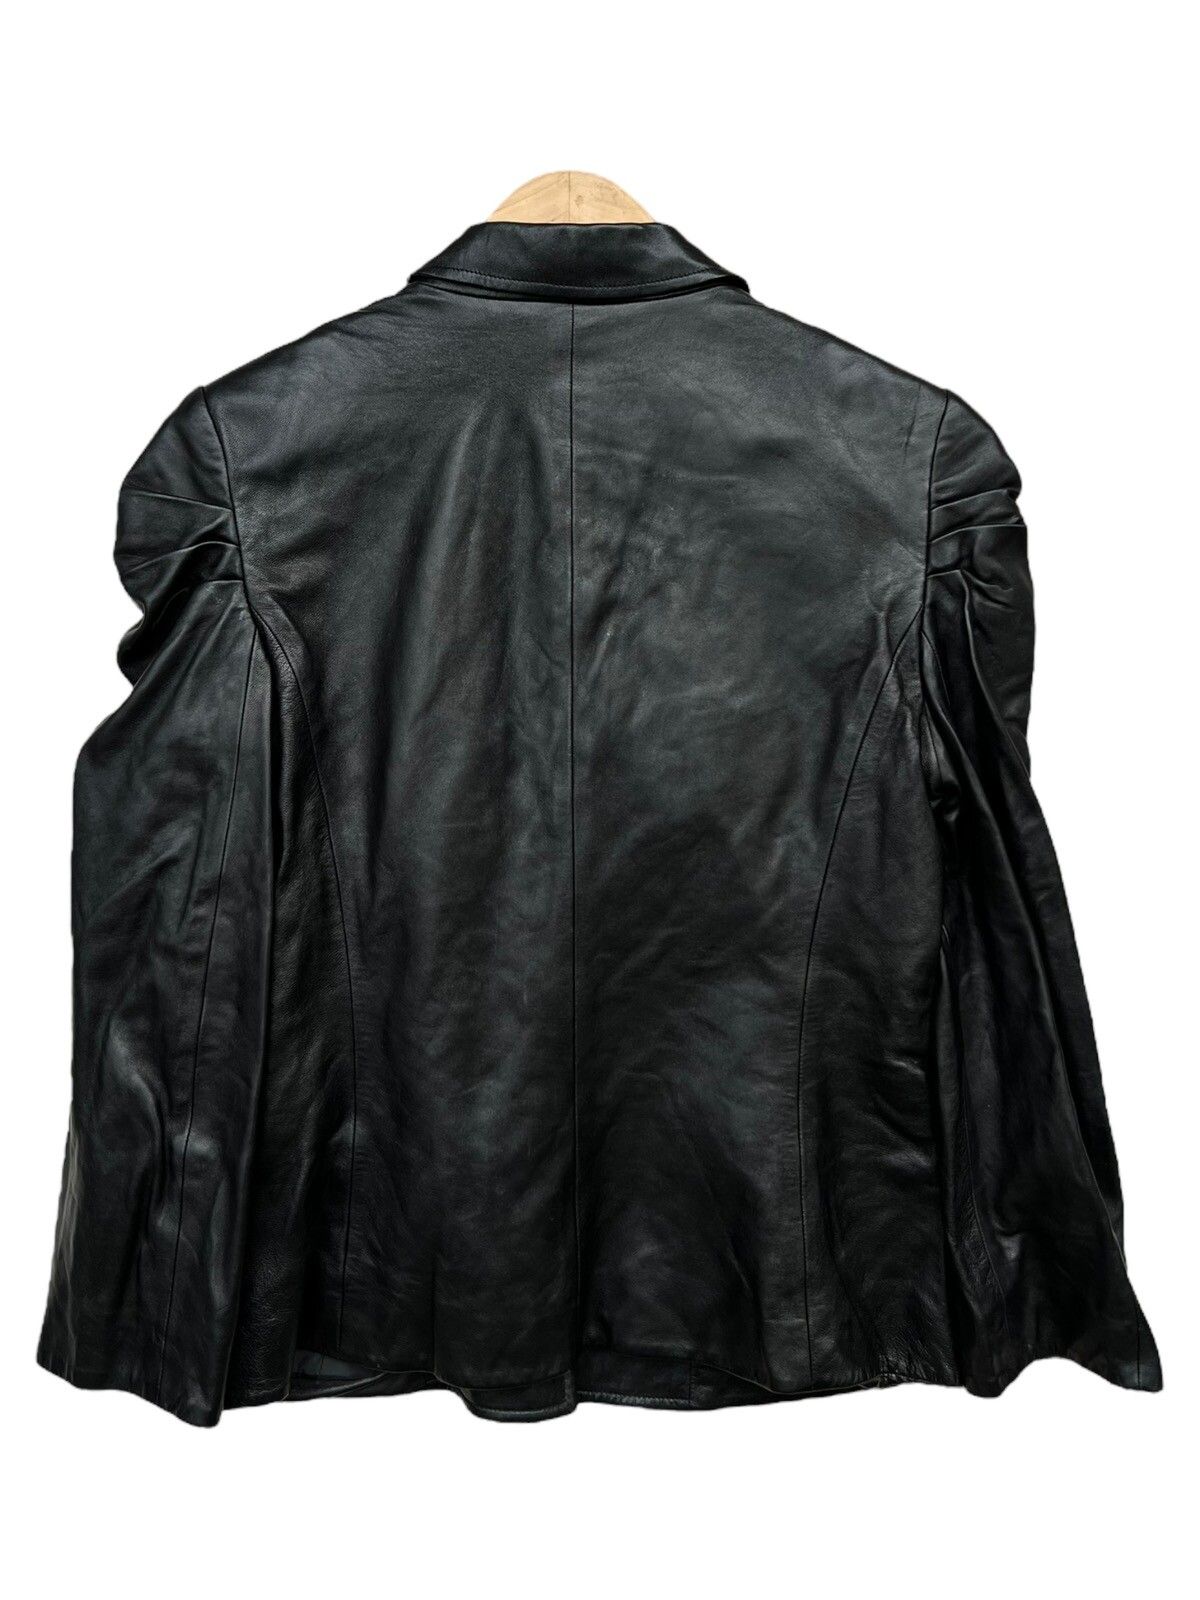 Versace Leather Jacket - 2